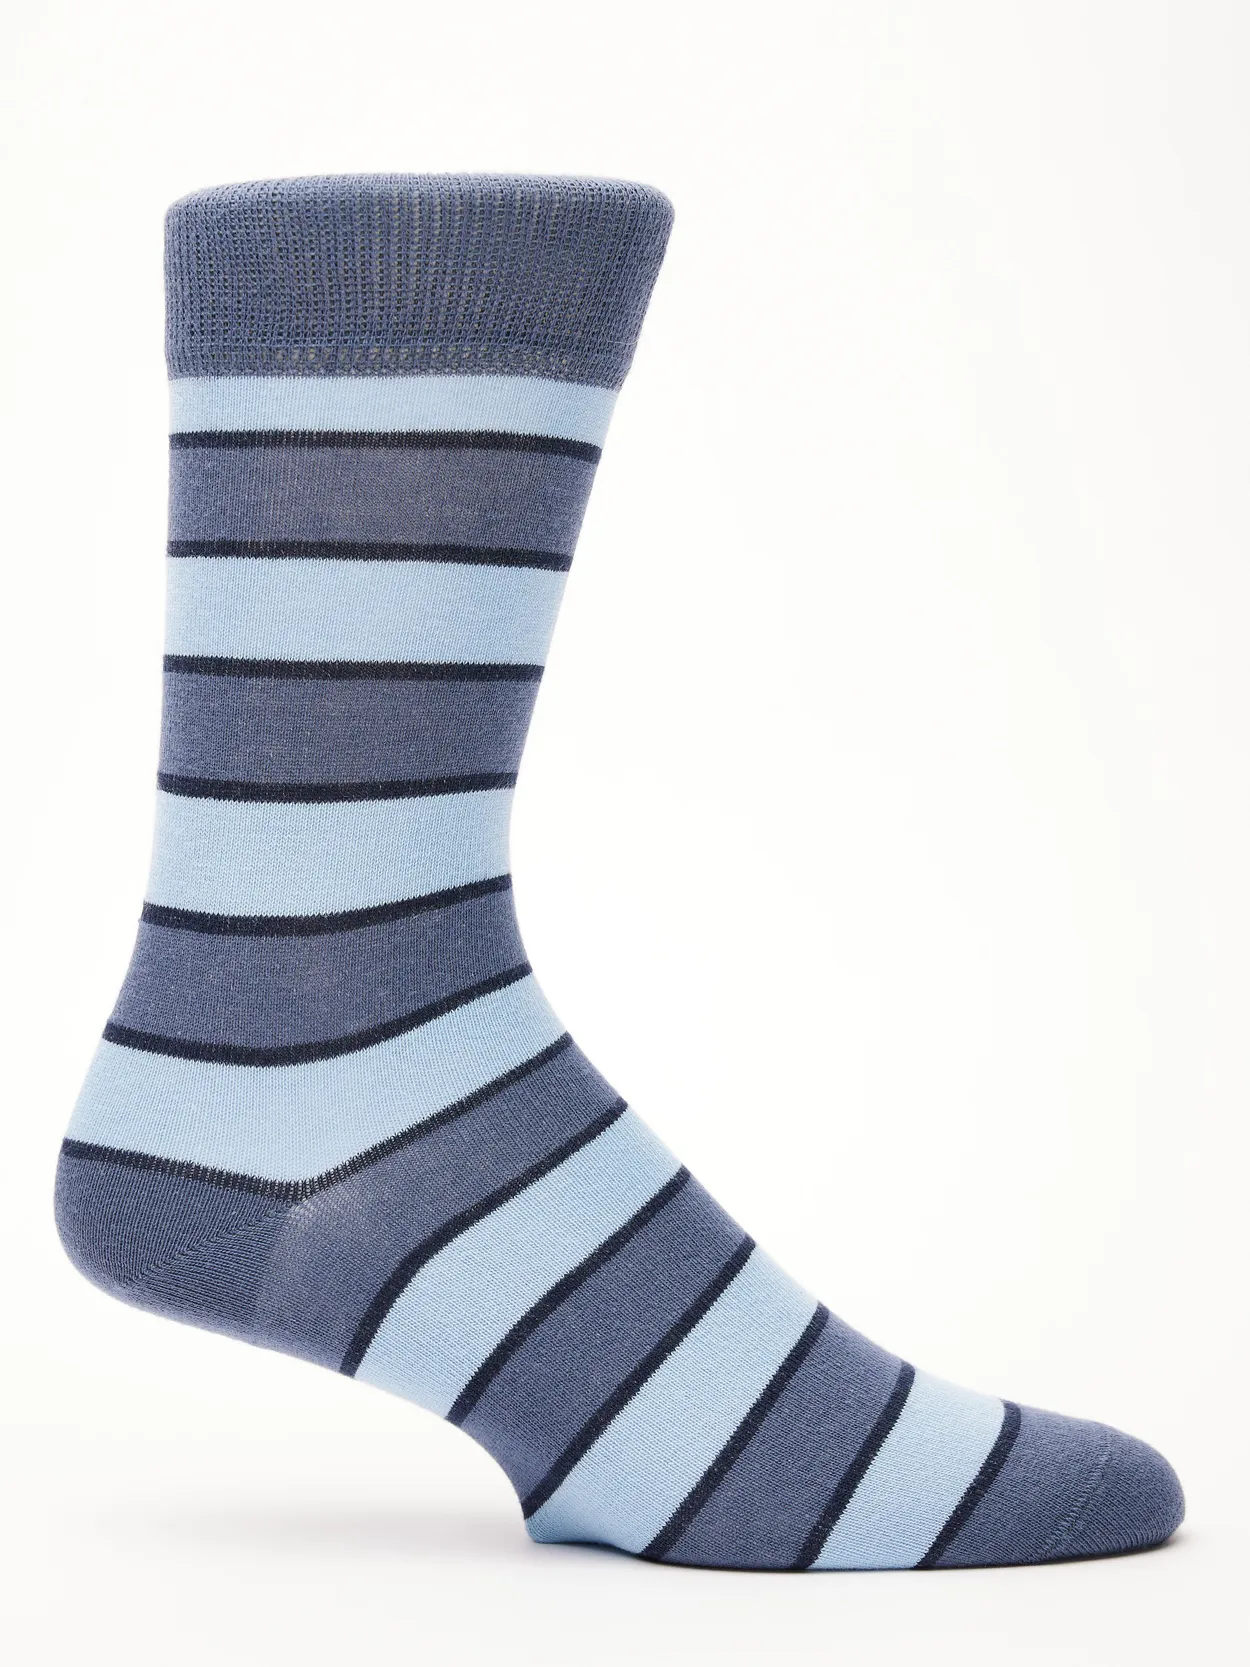 Blue & Light Blue Socks Leeds